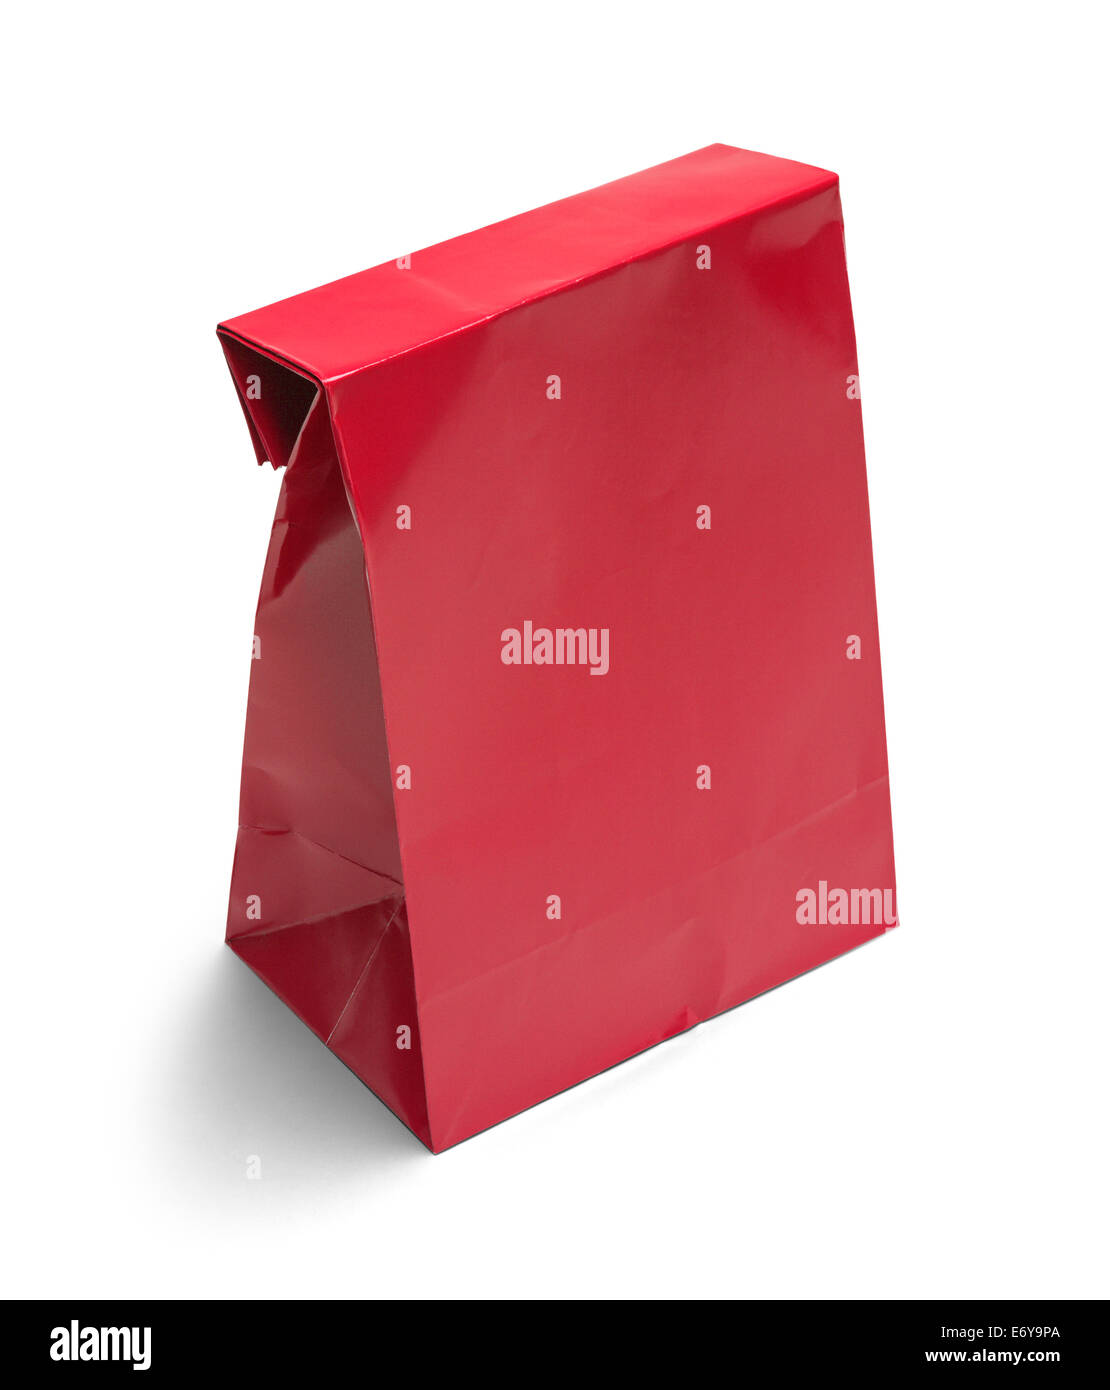 Gefaltet, rotes Papier Bag Lunch mit textfreiraum Isolated on White Background. Stockfoto